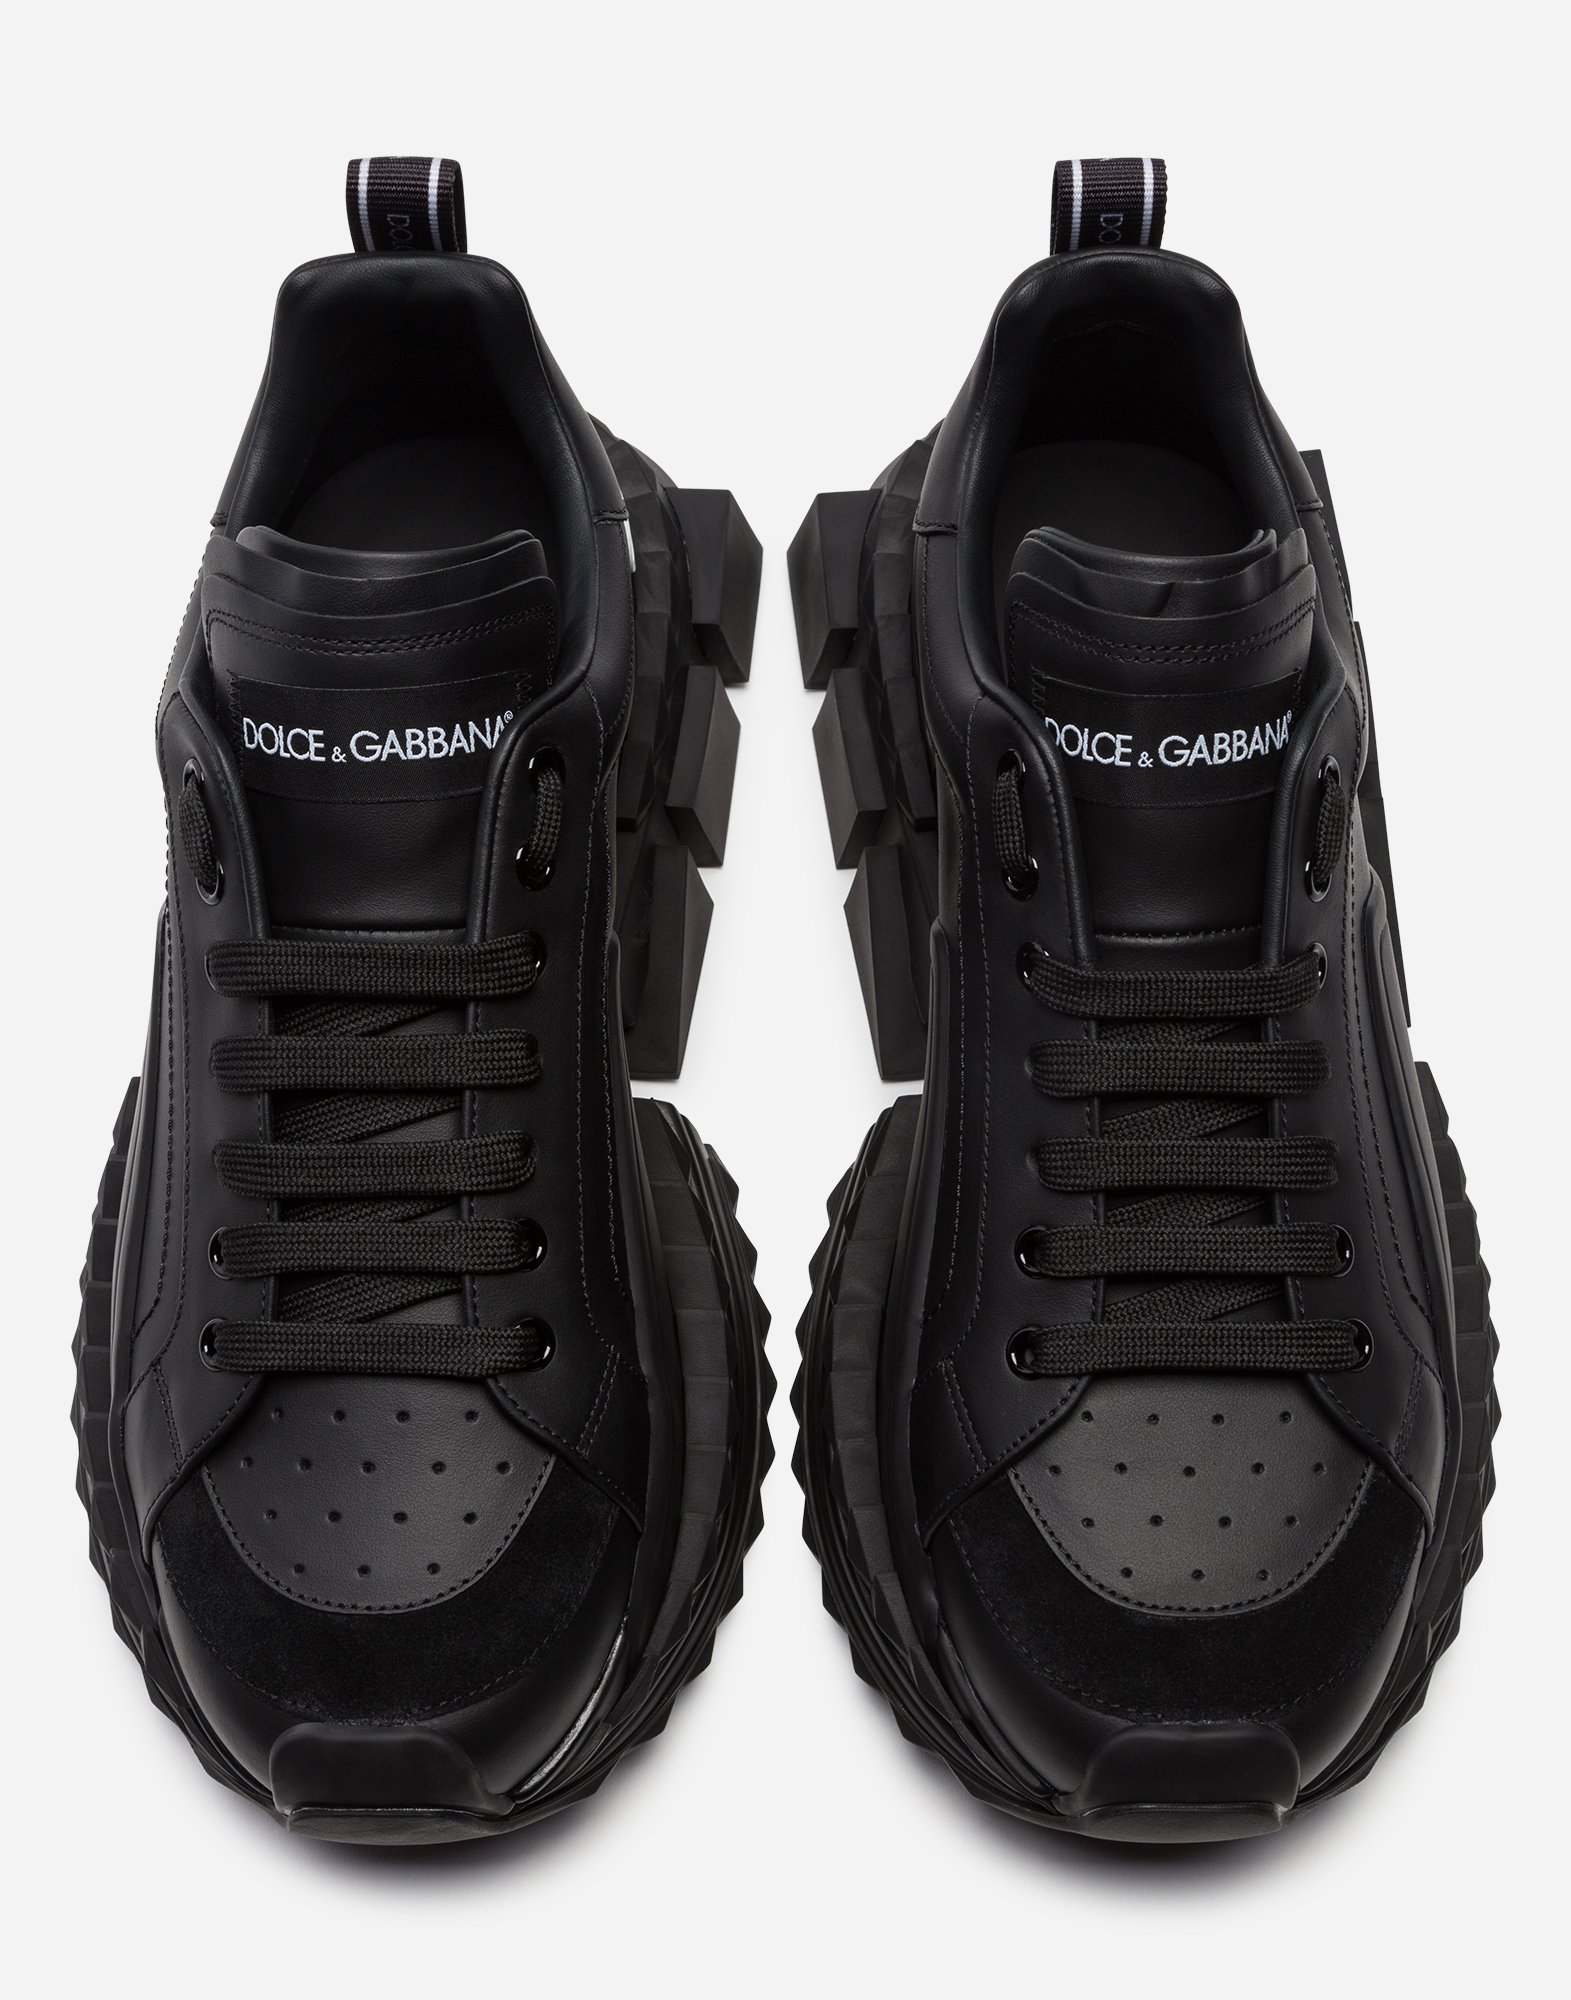 dolce & gabbana shoes black